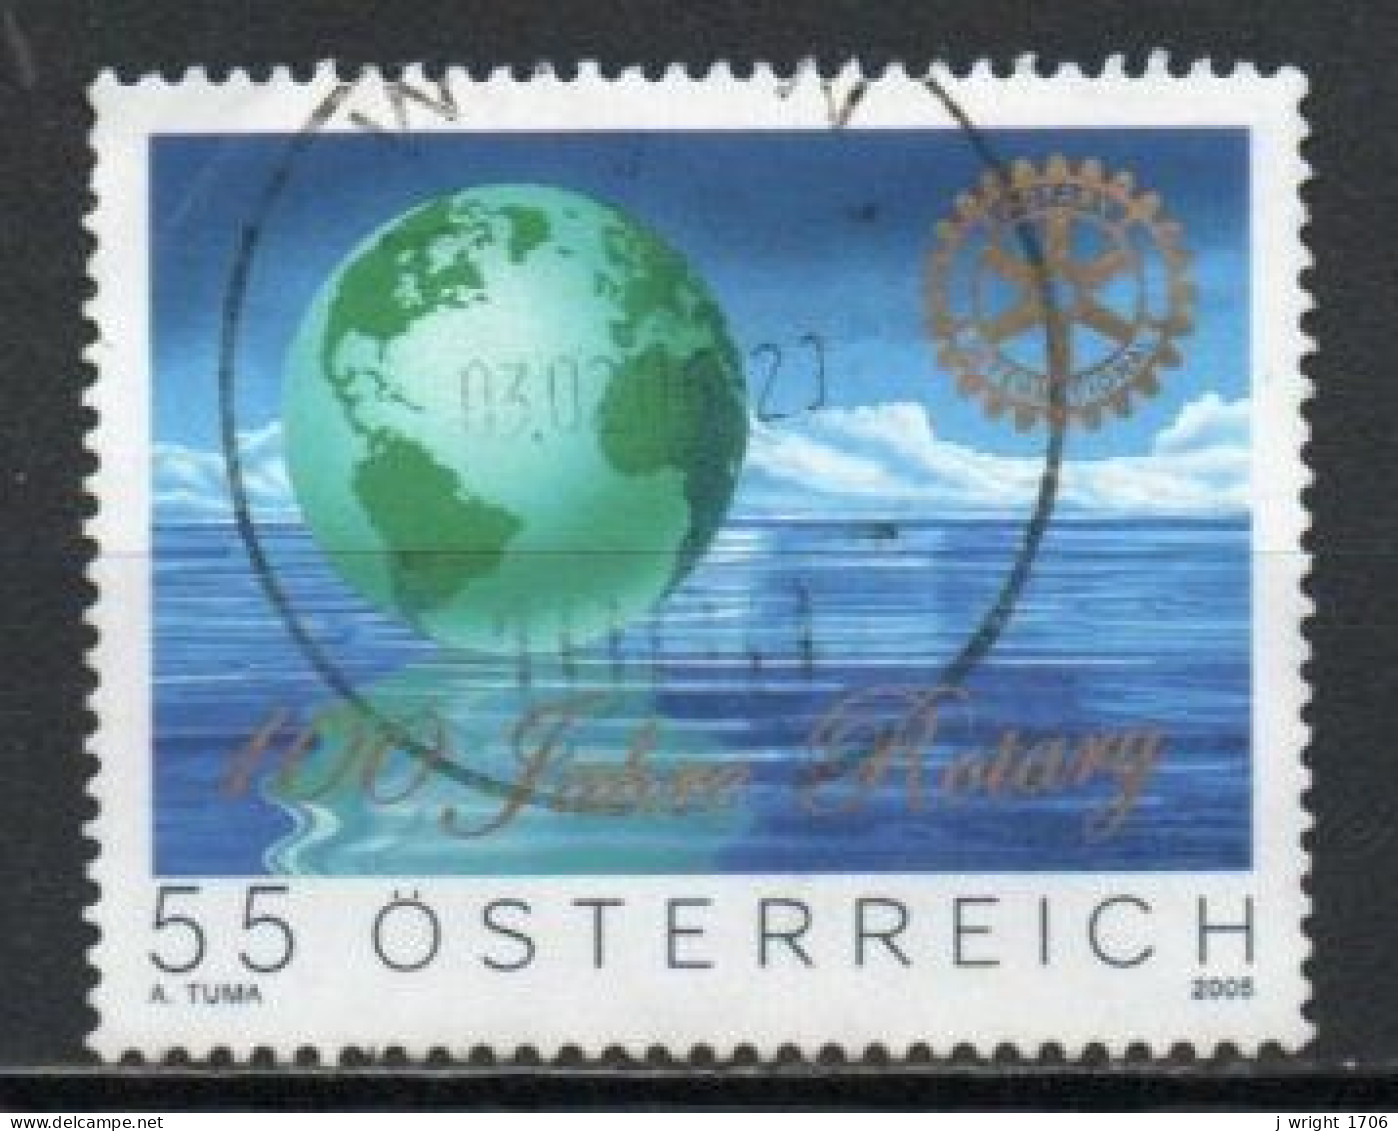 Austria, 2005, Rotary International Centenary, 55c, USED - Gebraucht